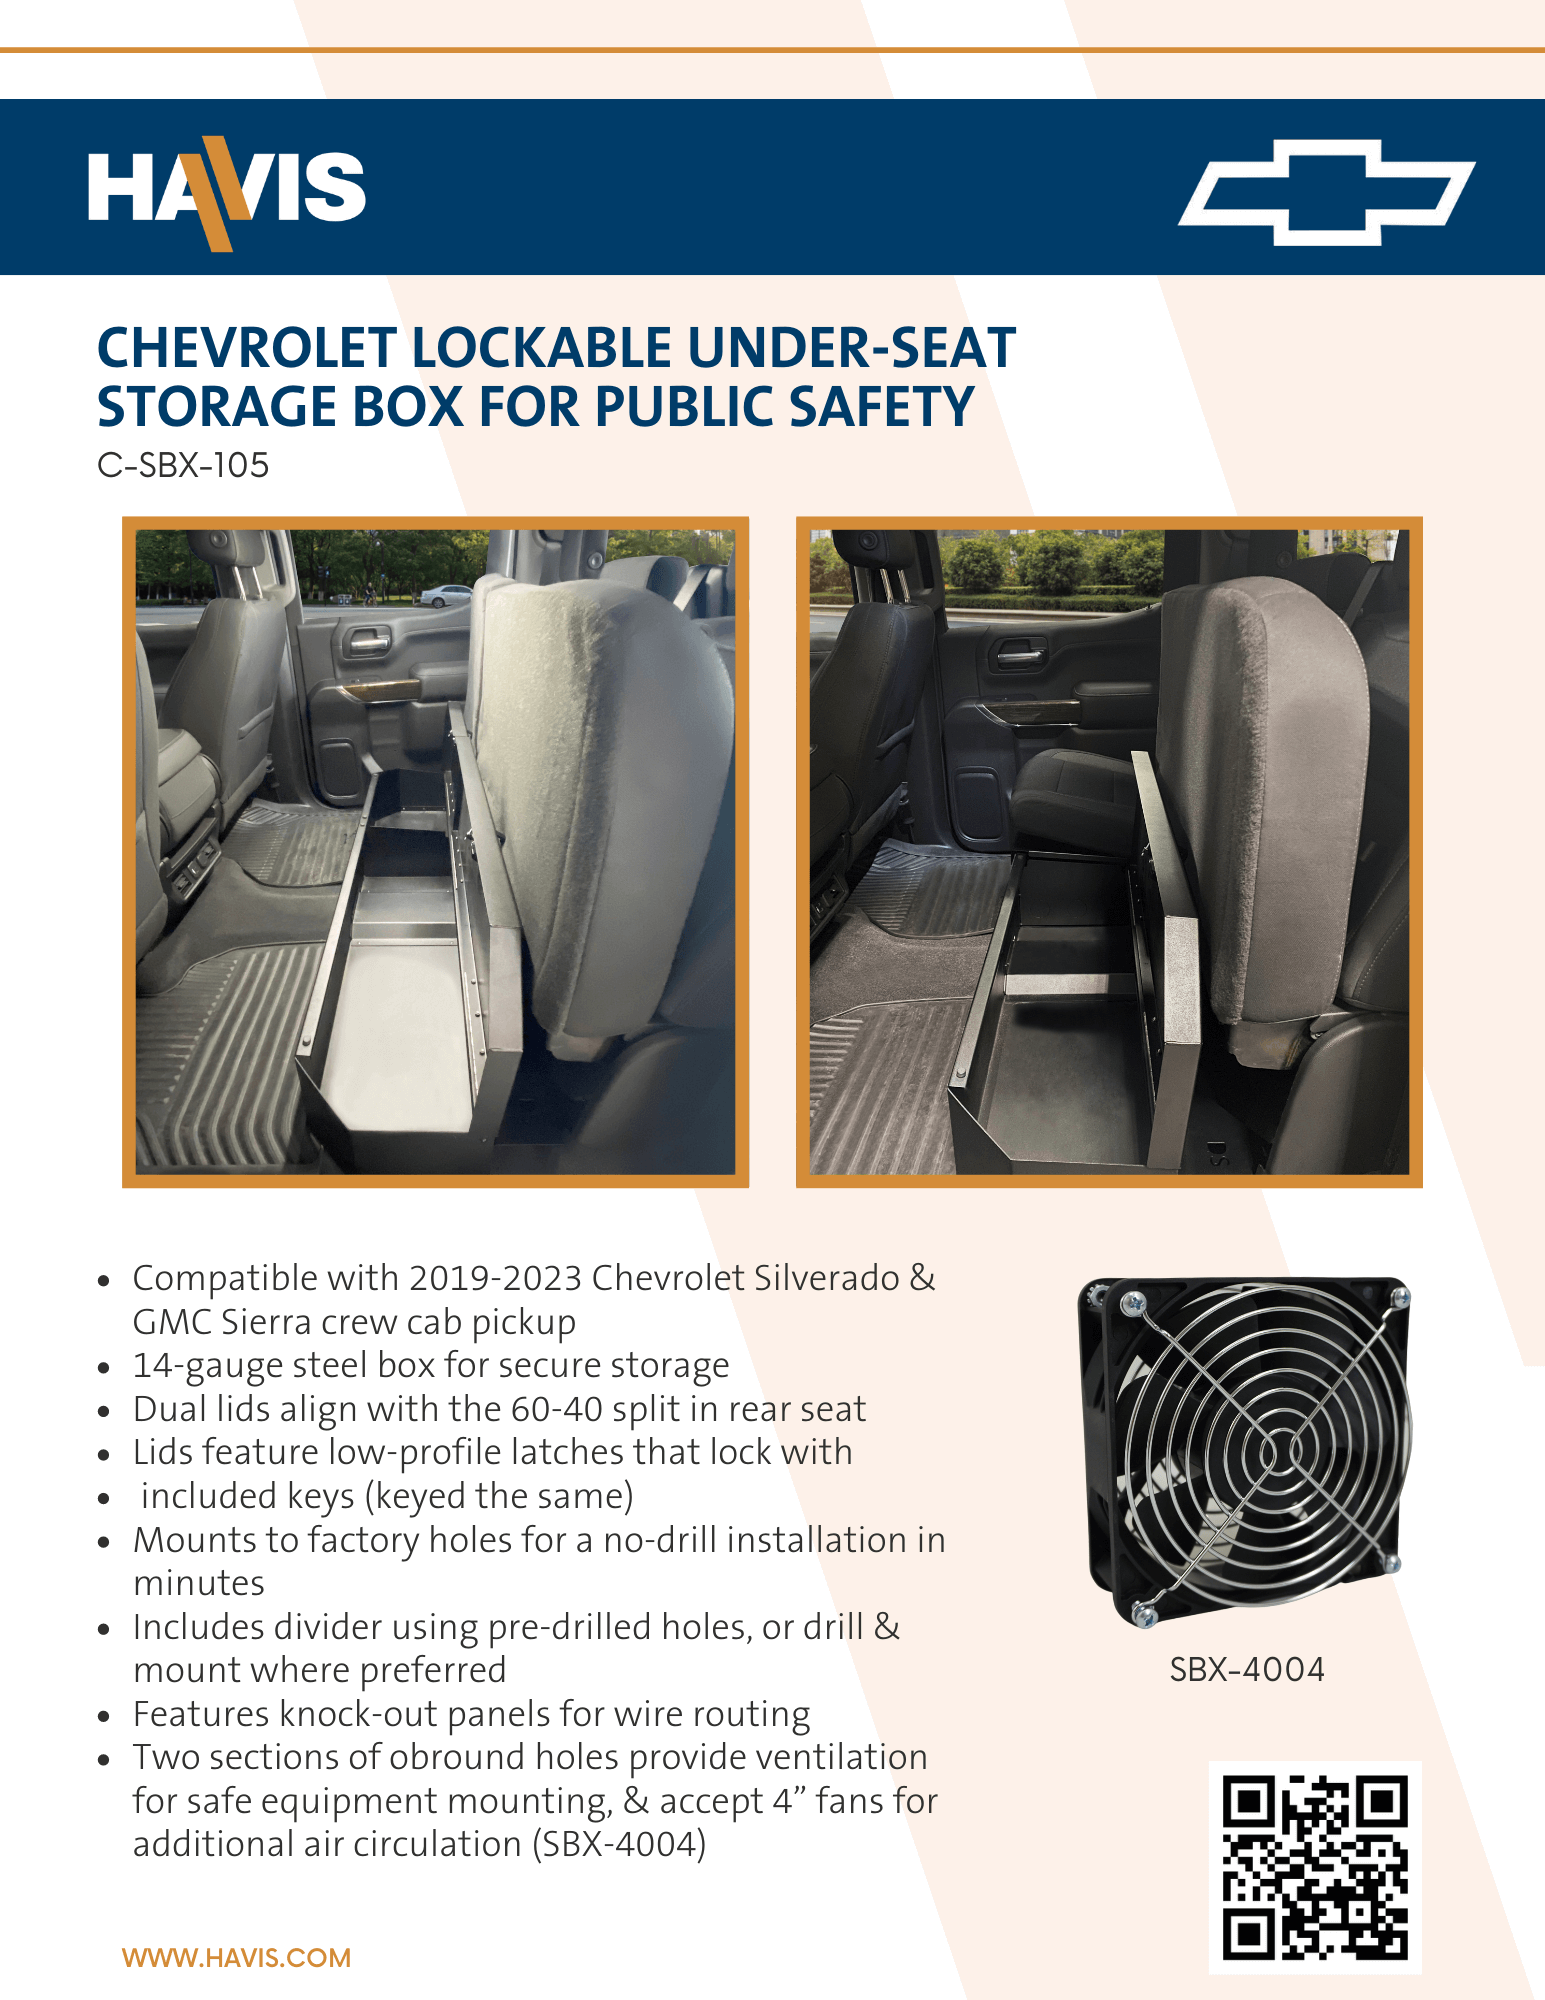 Chevrolet Lockable Under-Seat Storage Box for Public Safety Sales Sheet